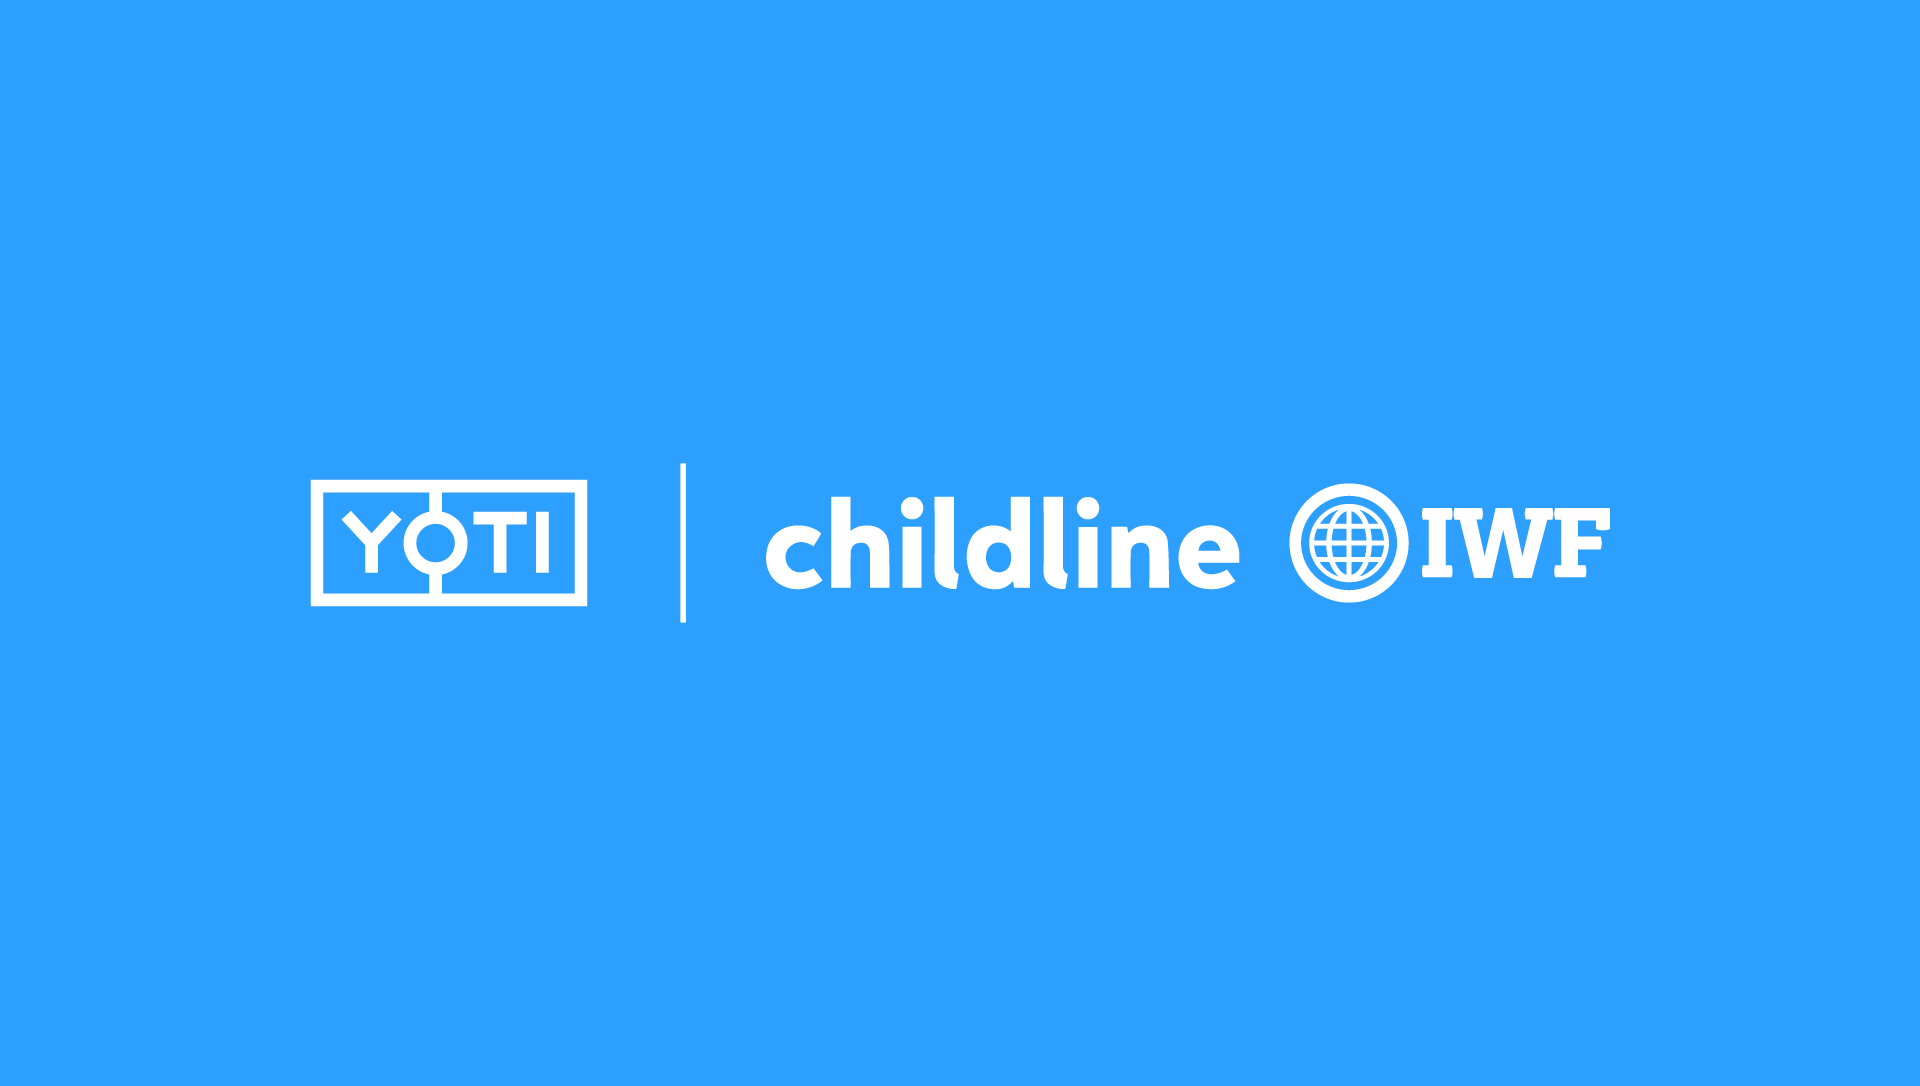 Yoti partners with Childline and IWF